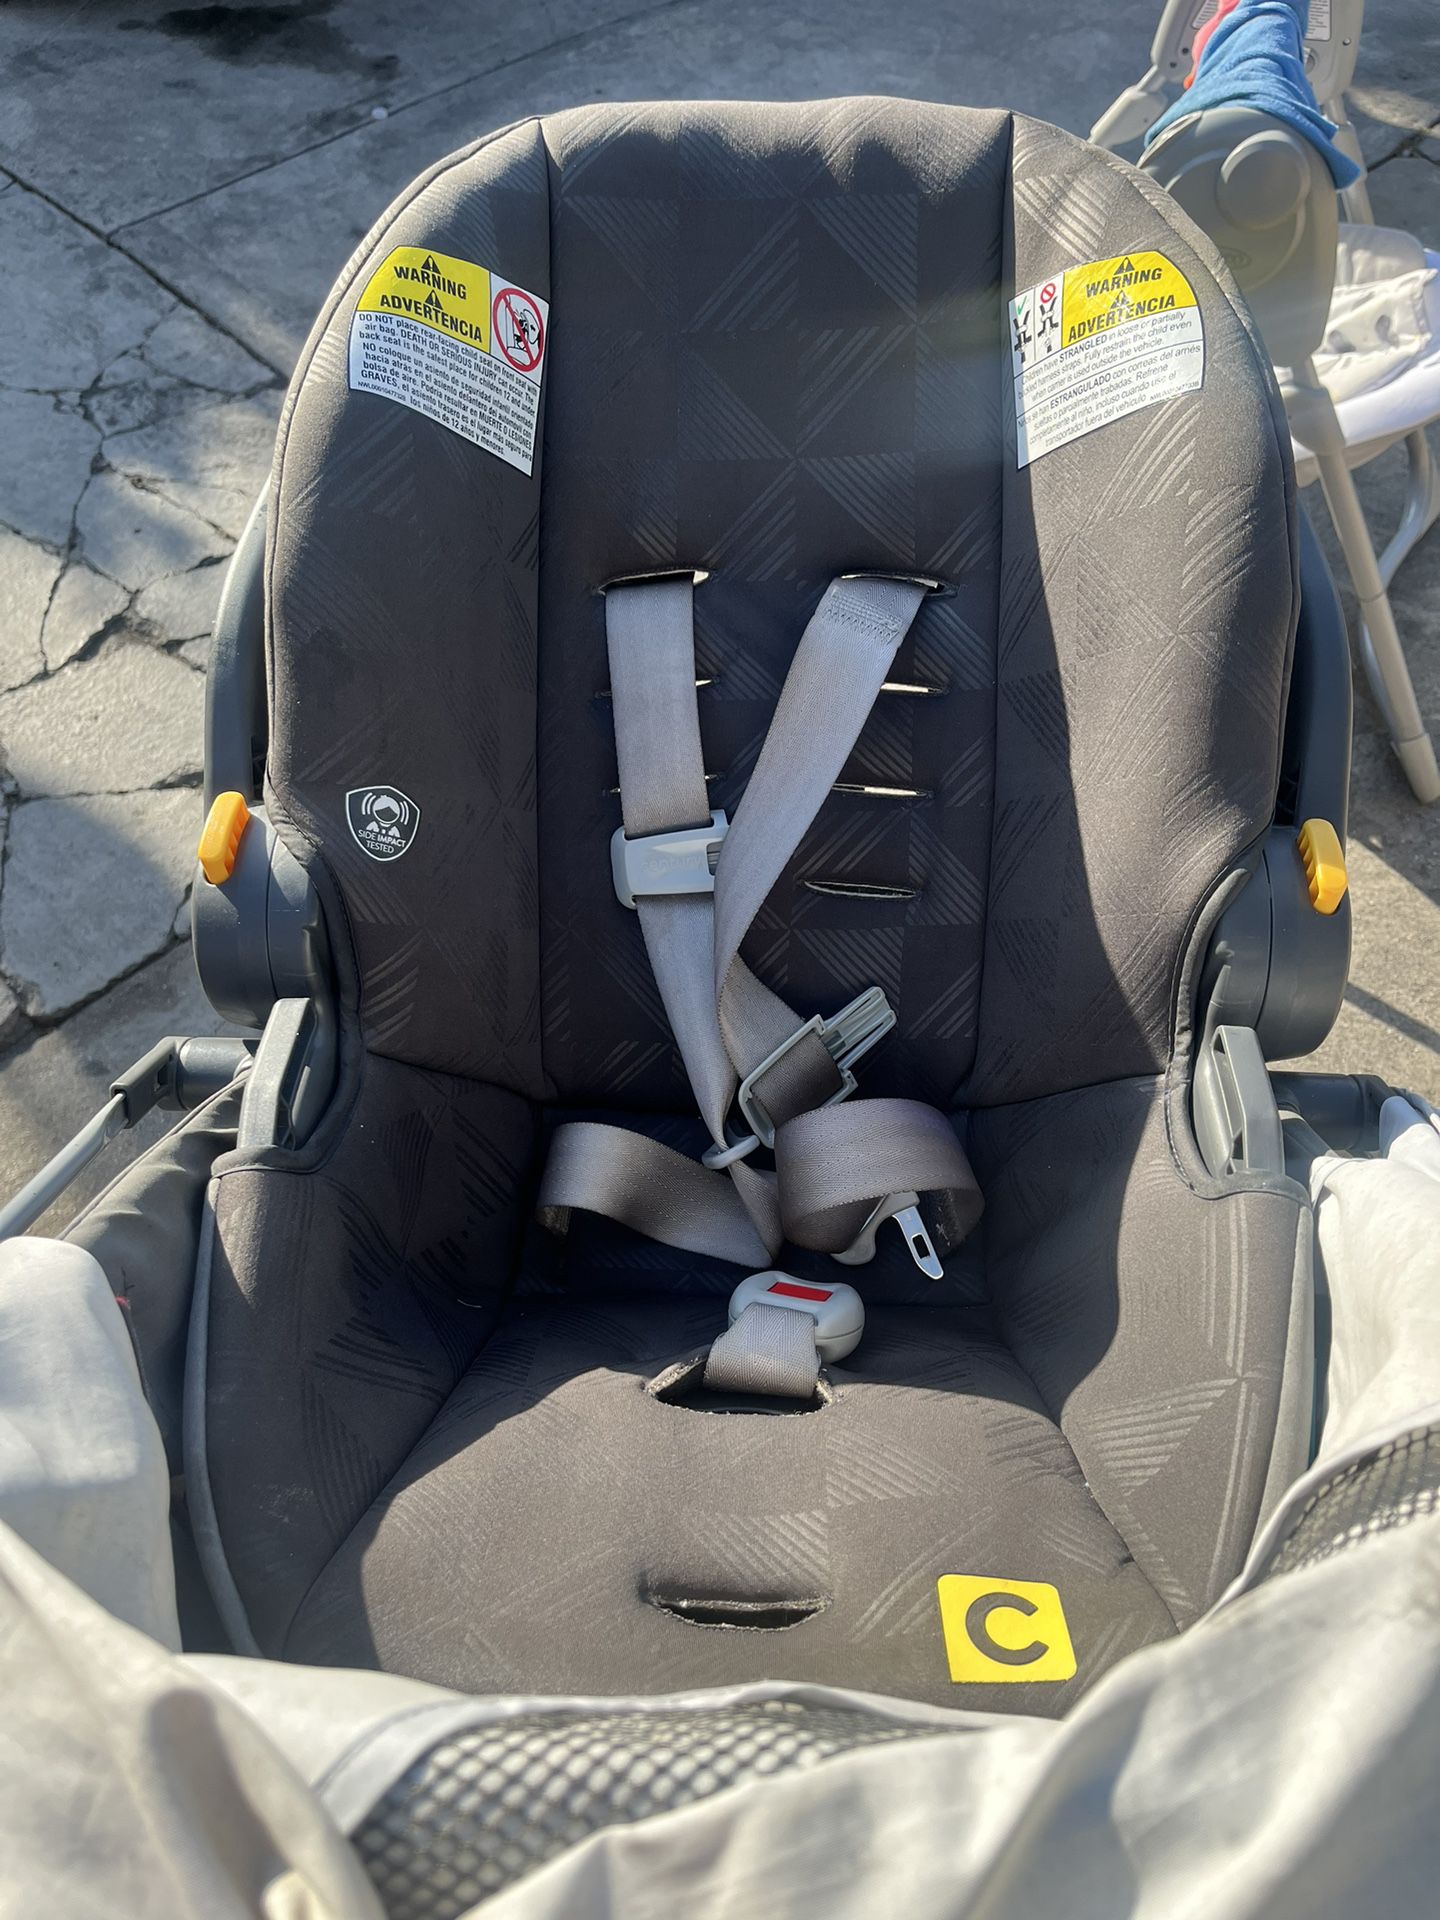 Century Infant Car Seat